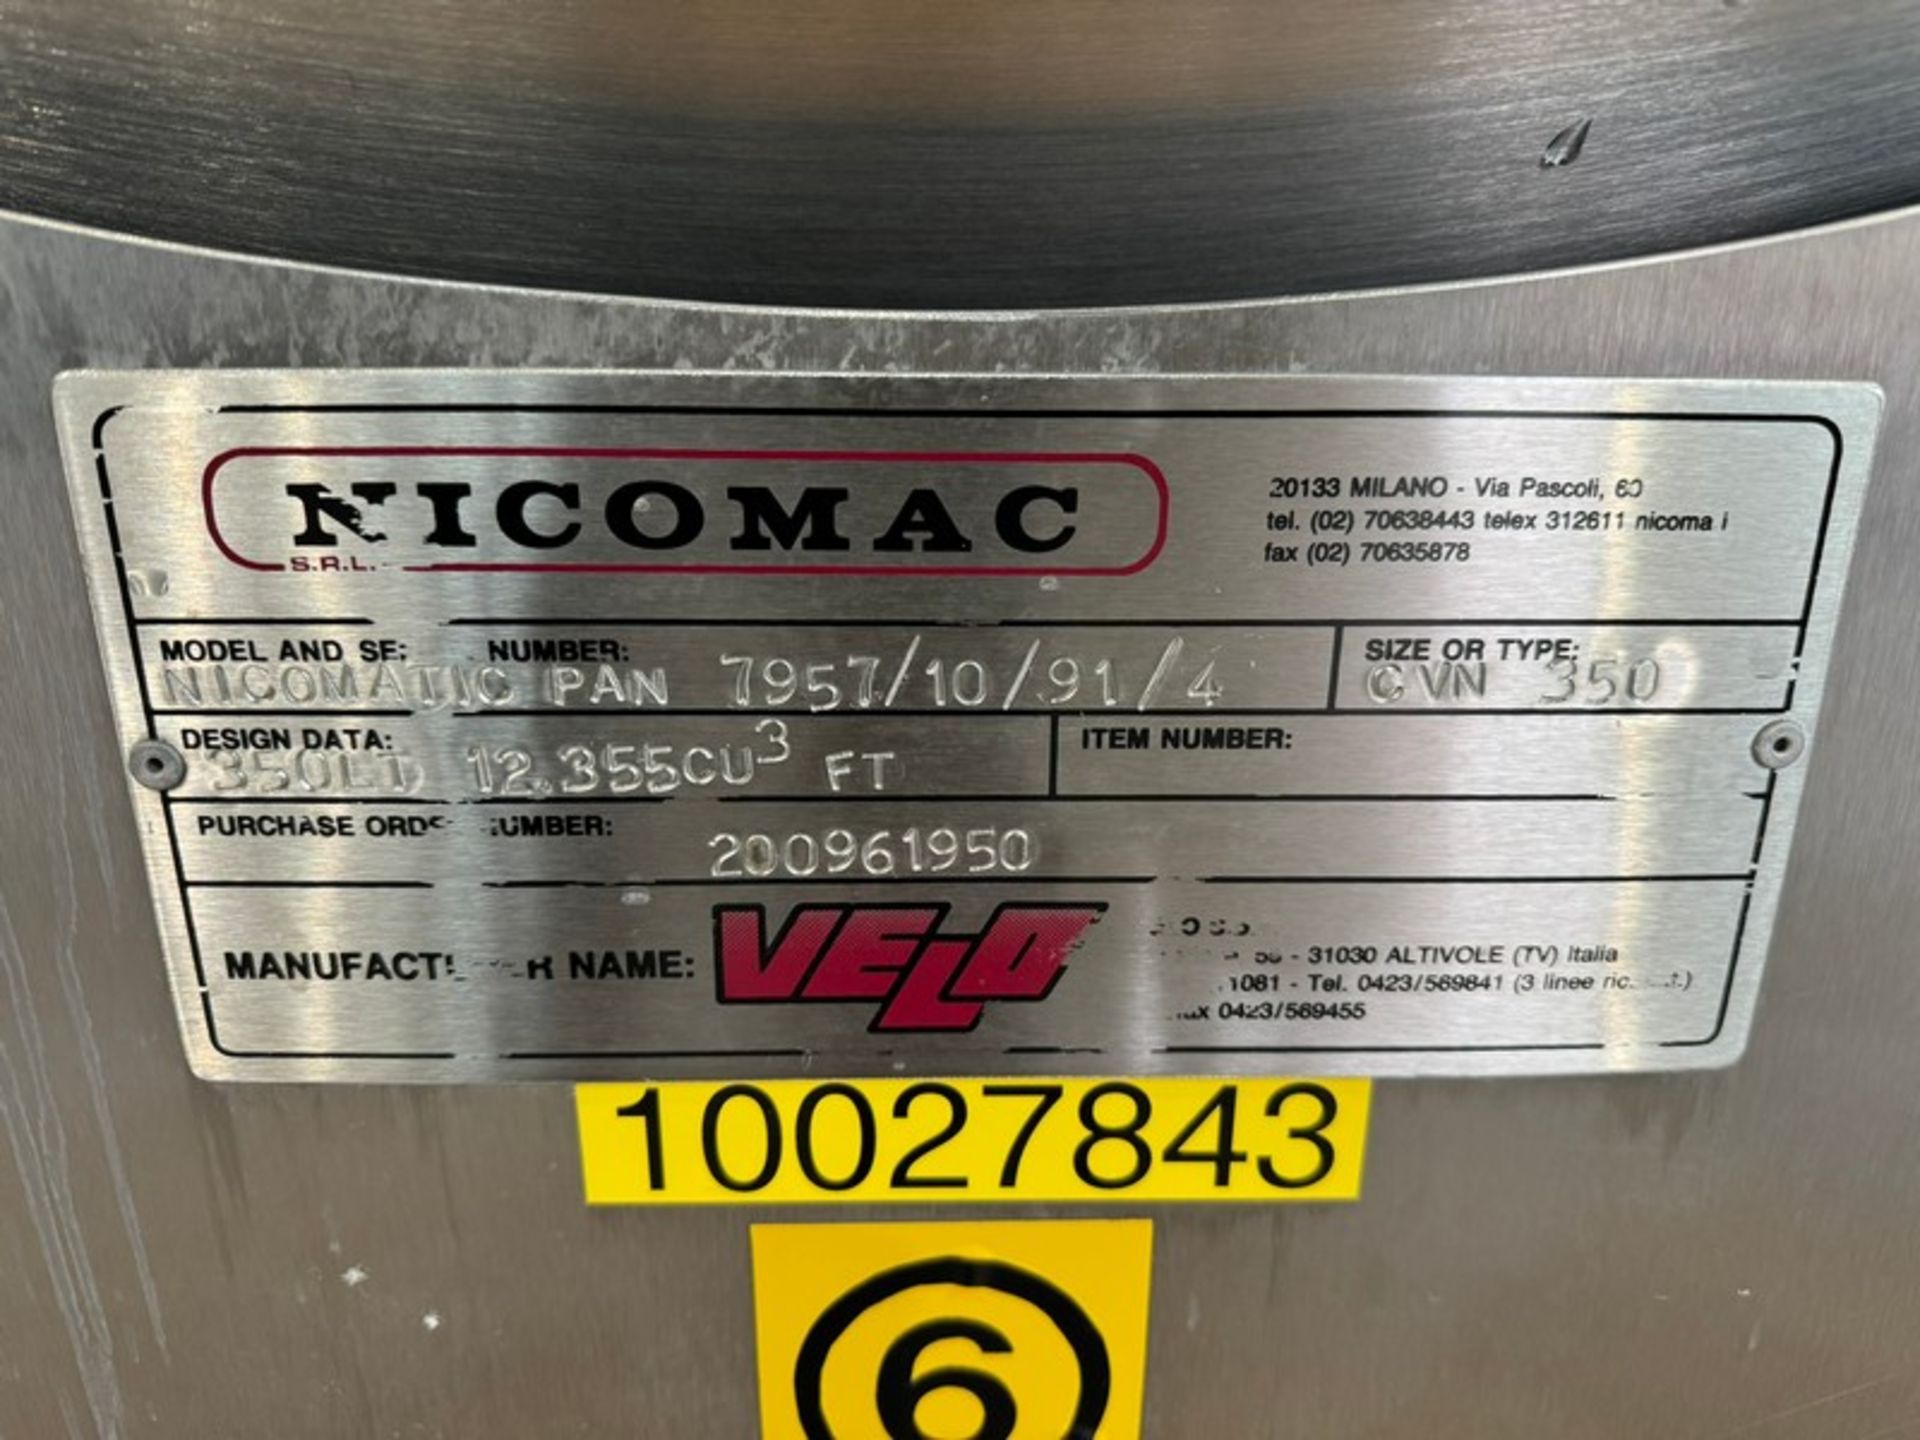 Nicomac S/S Coating Pan, M/N NICOMATIC PAN, S/N 7957/10/91/4, Size or Type: CVN 350, Design Data: - Image 7 of 10